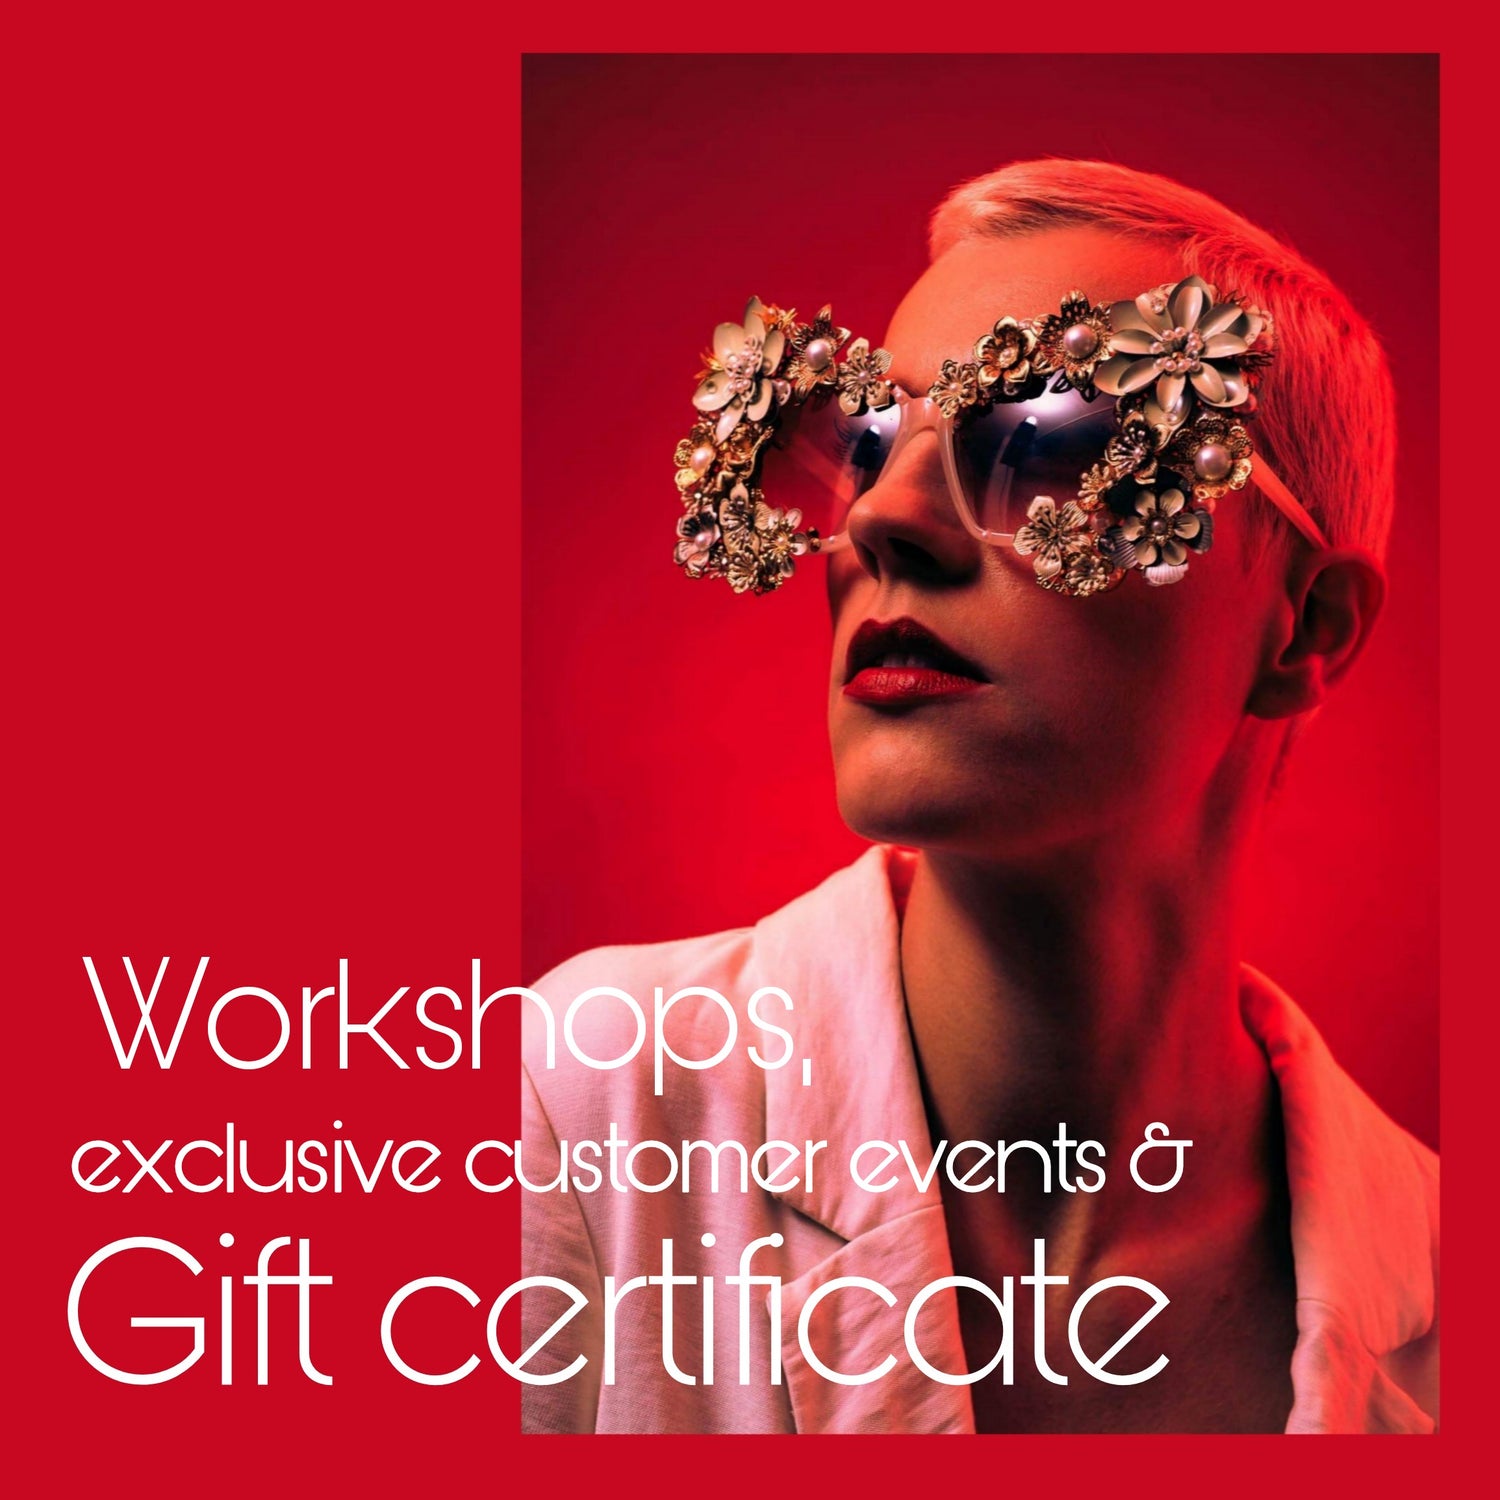 Workshops, exclusive customer events & gift certificates